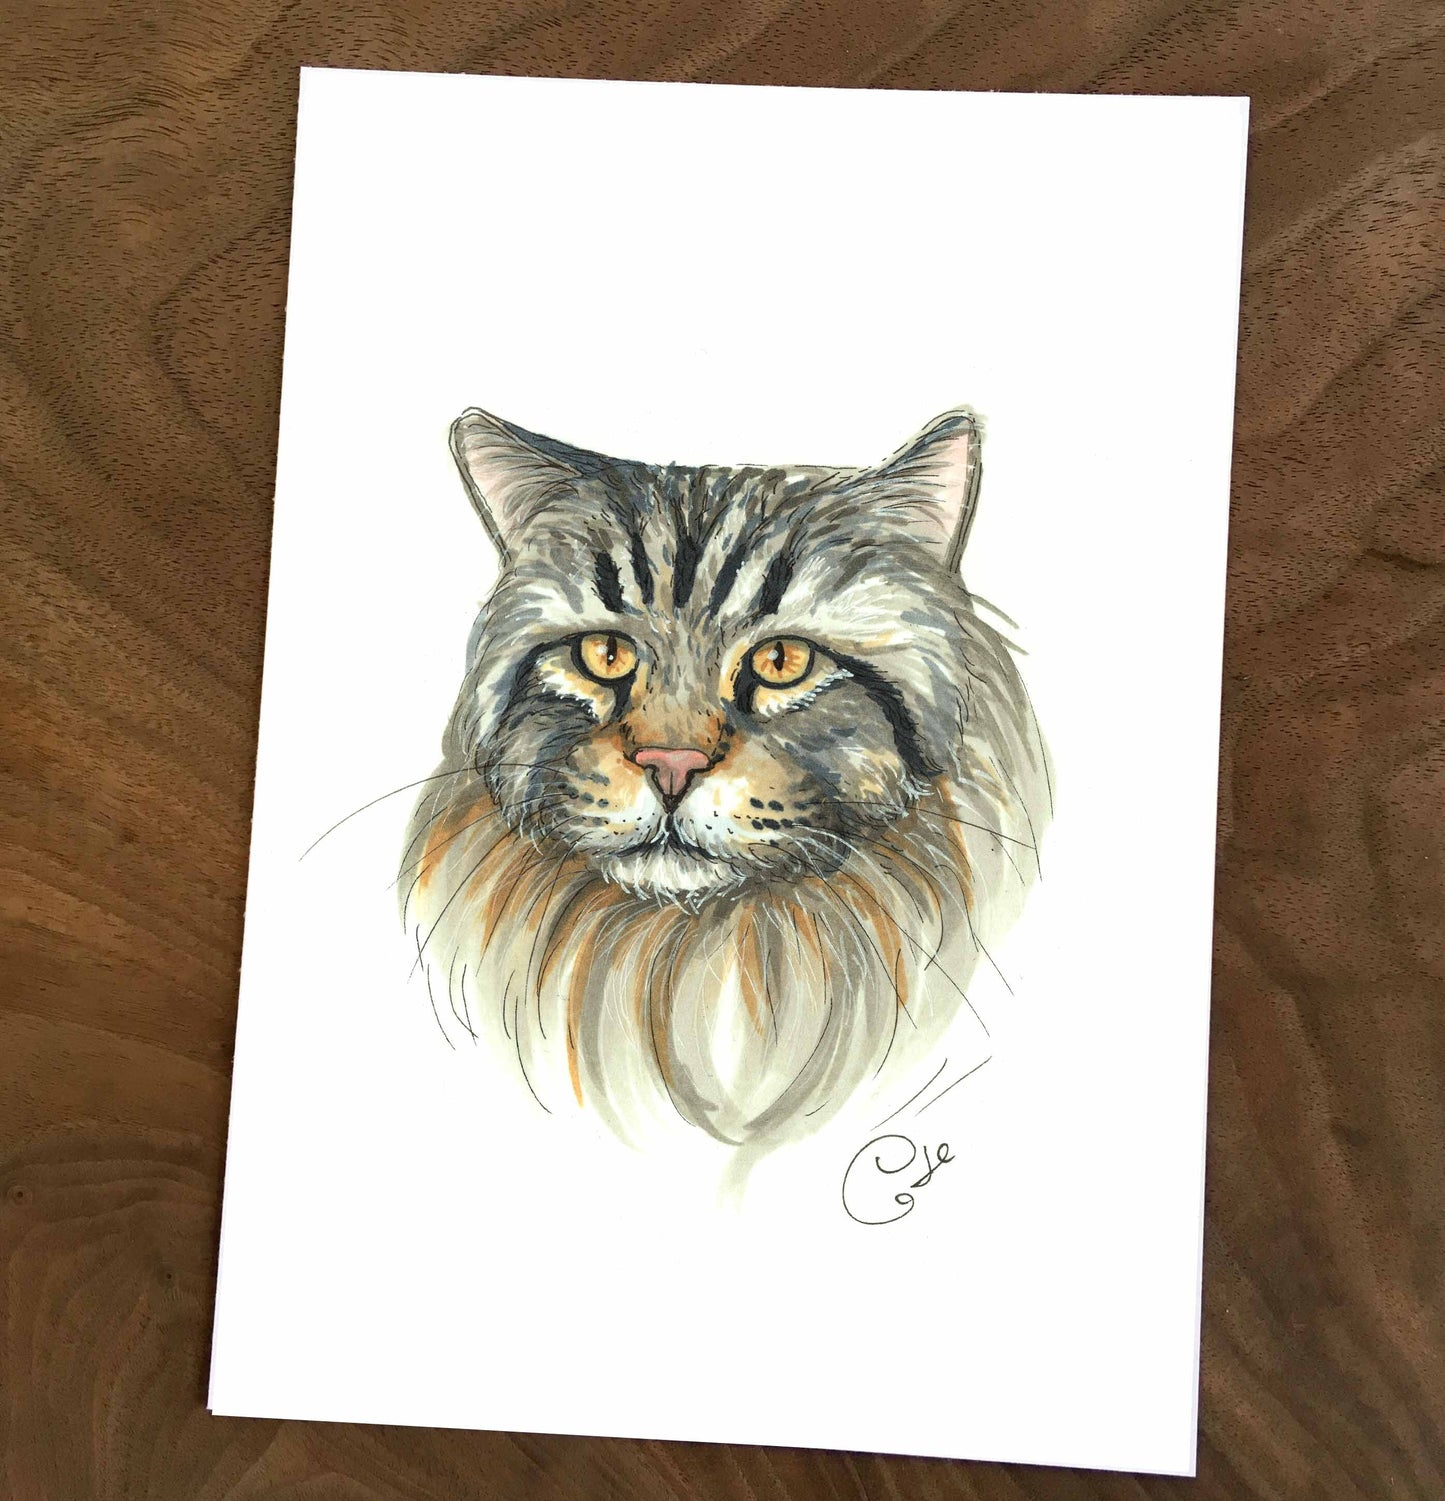 Petites illustrations originales - Choix de six oeuvres de chats